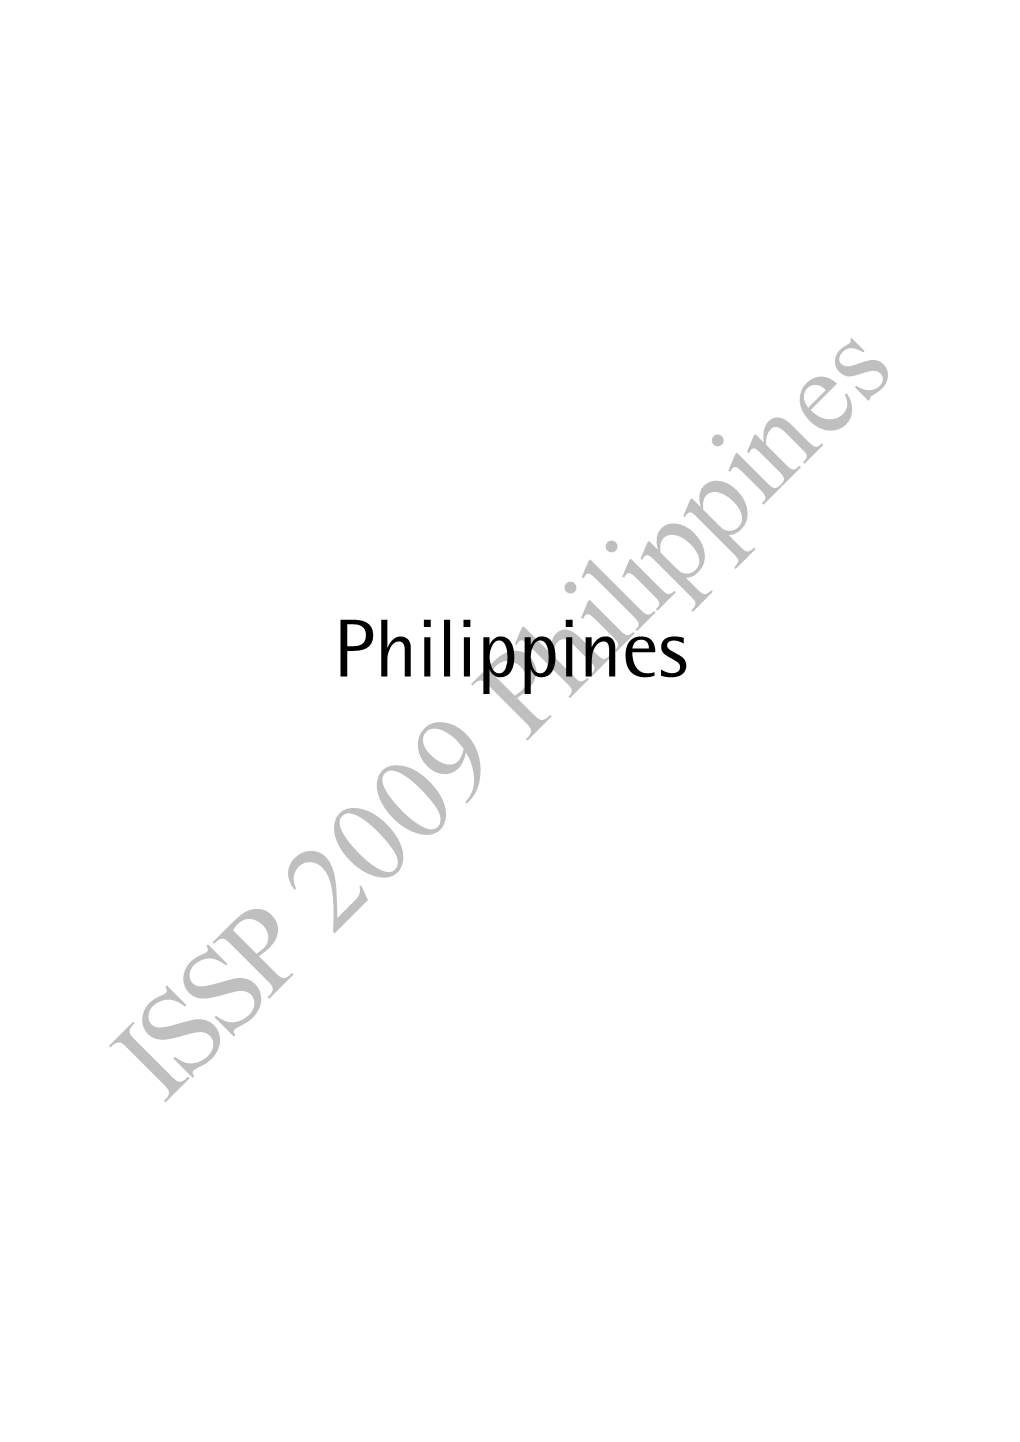 Philippines Philippines